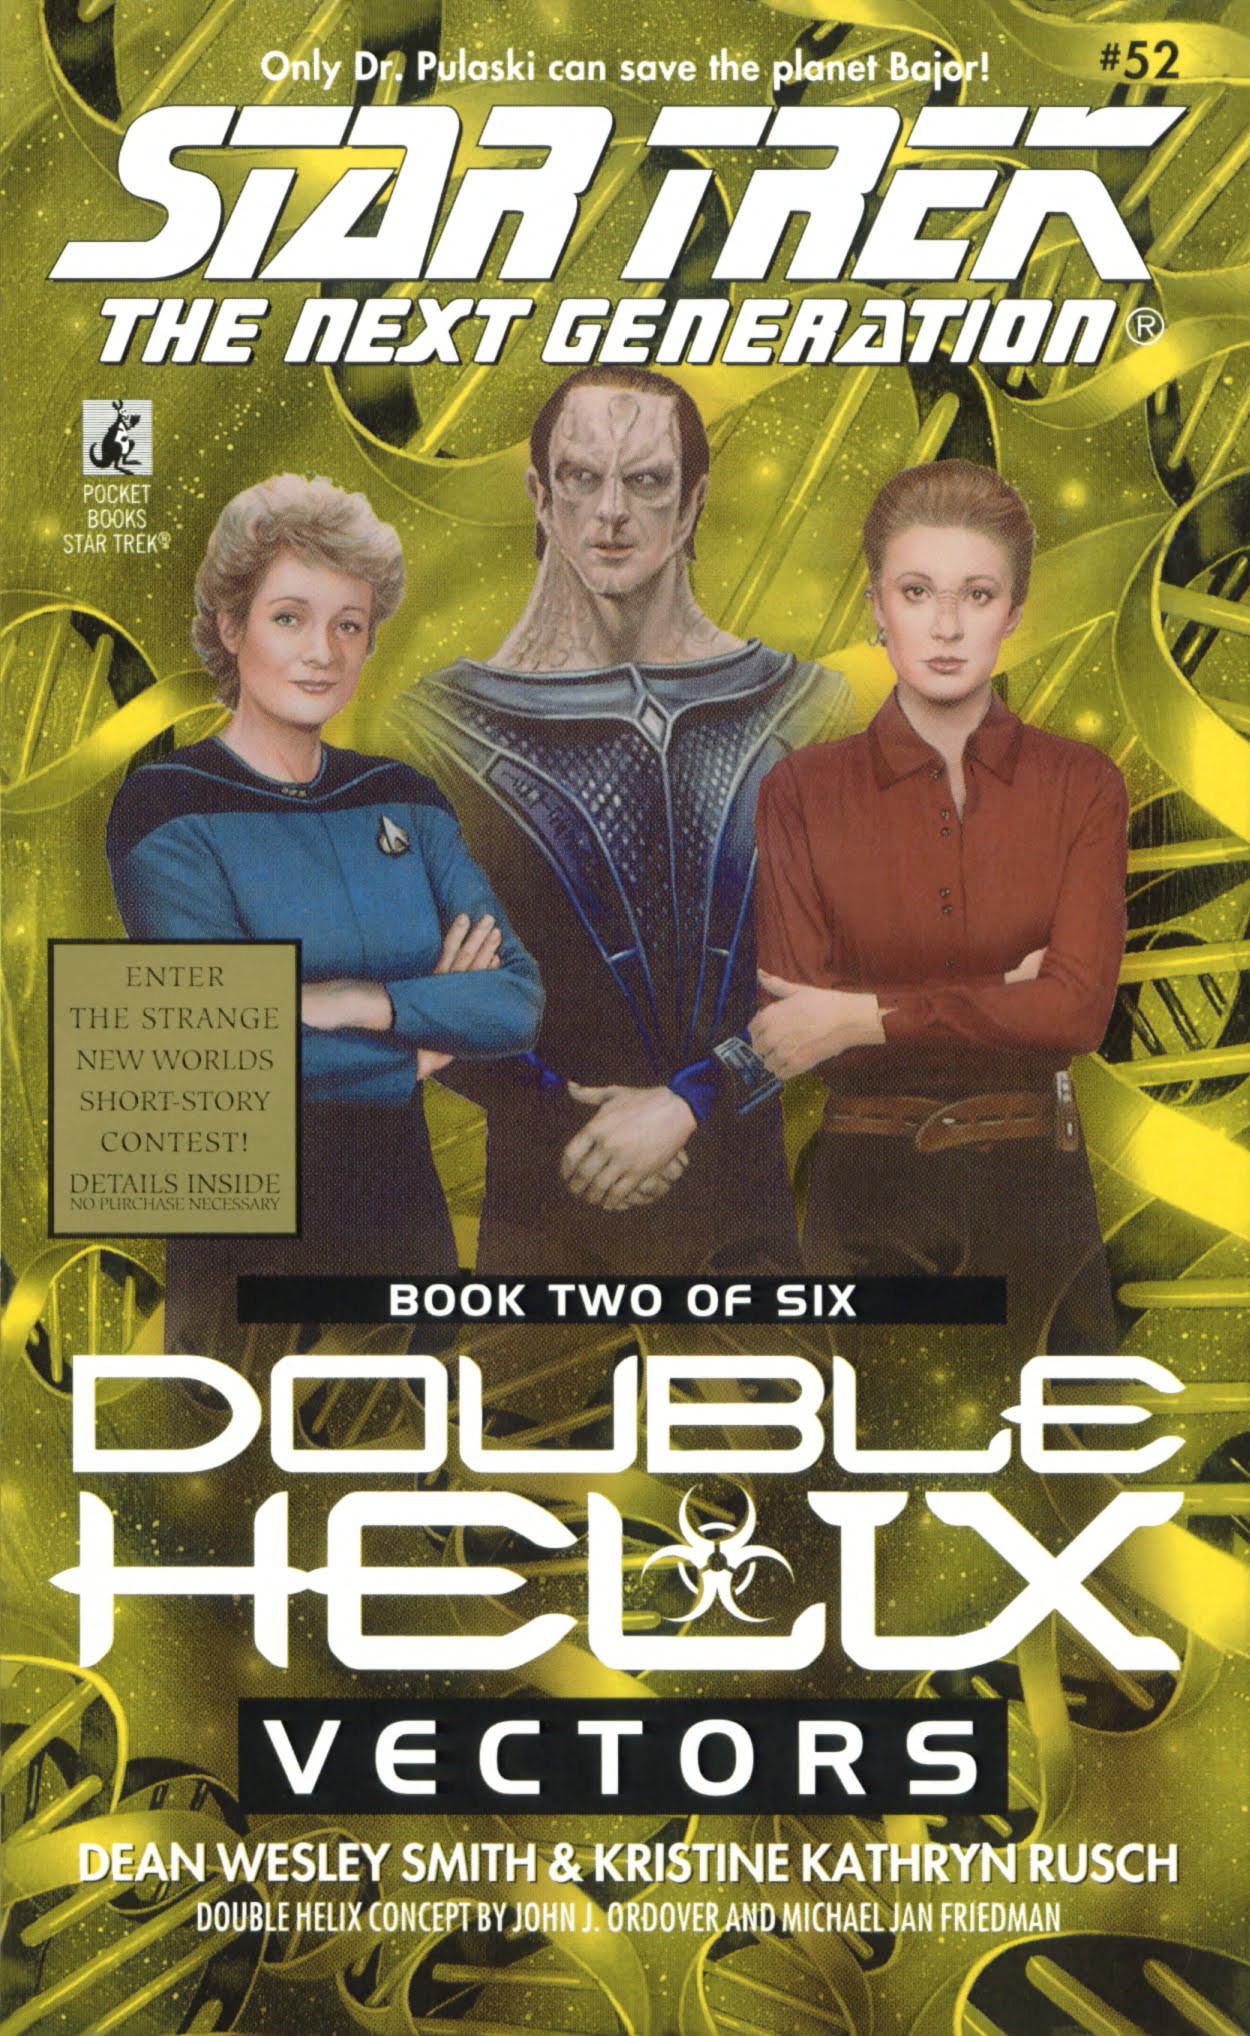 Dean Wesley Smith, Kristine Kathryn Rusch: Vectors (EBook, 2000, Pocket Books/Star Trek)